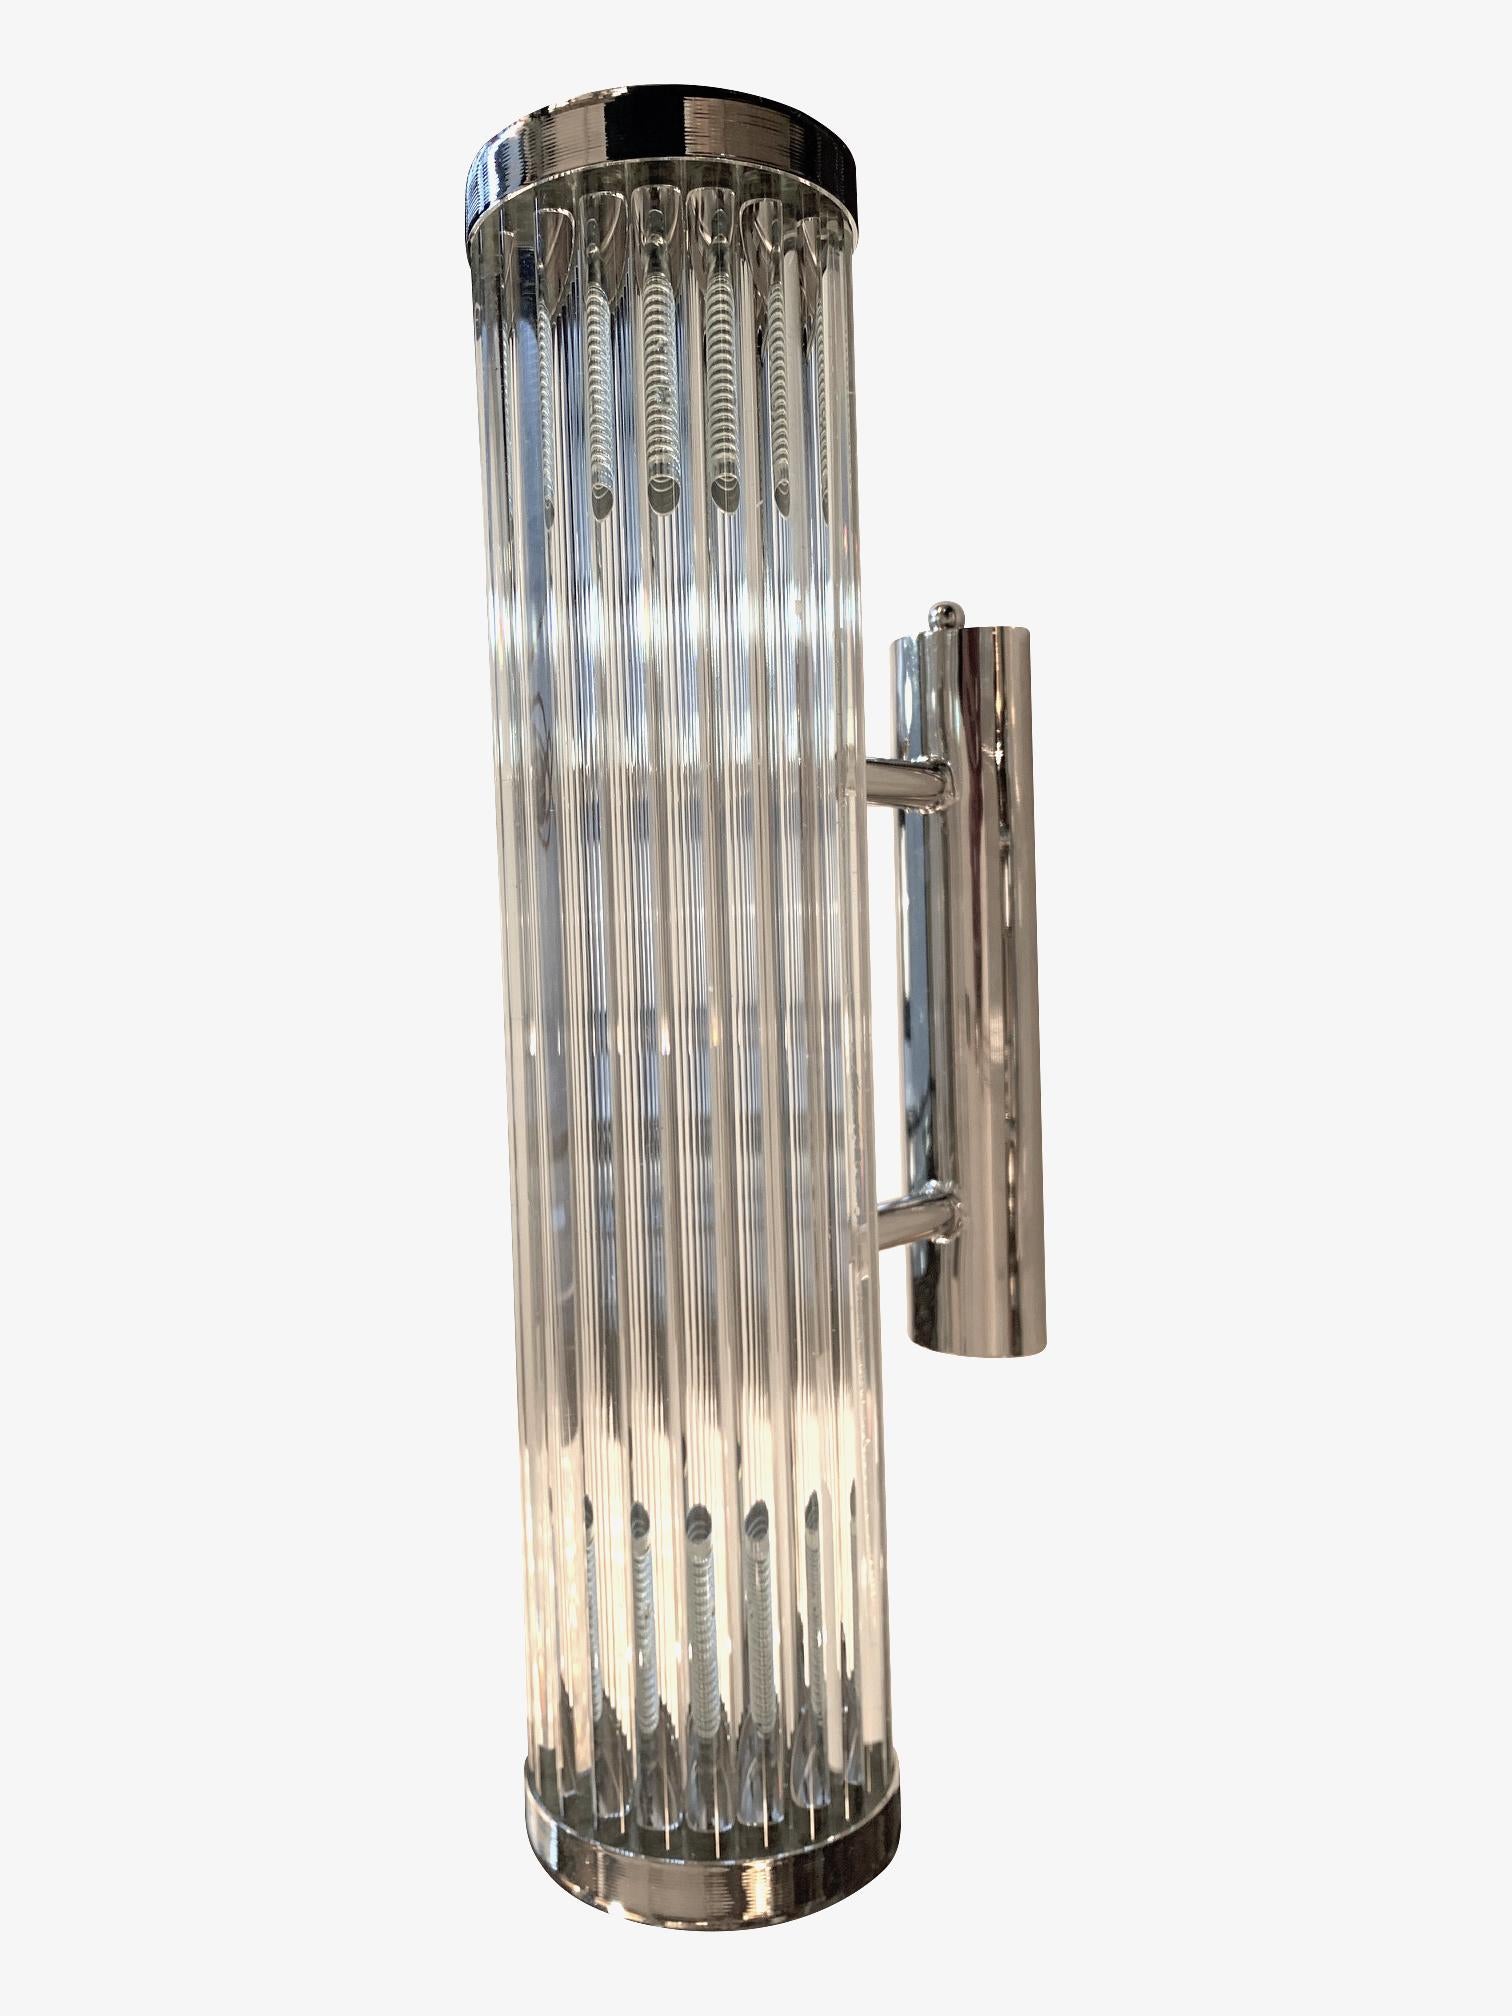 Italian Venini Style Murano Glass Rod, Wall Sconces with Chrome Fittings 5